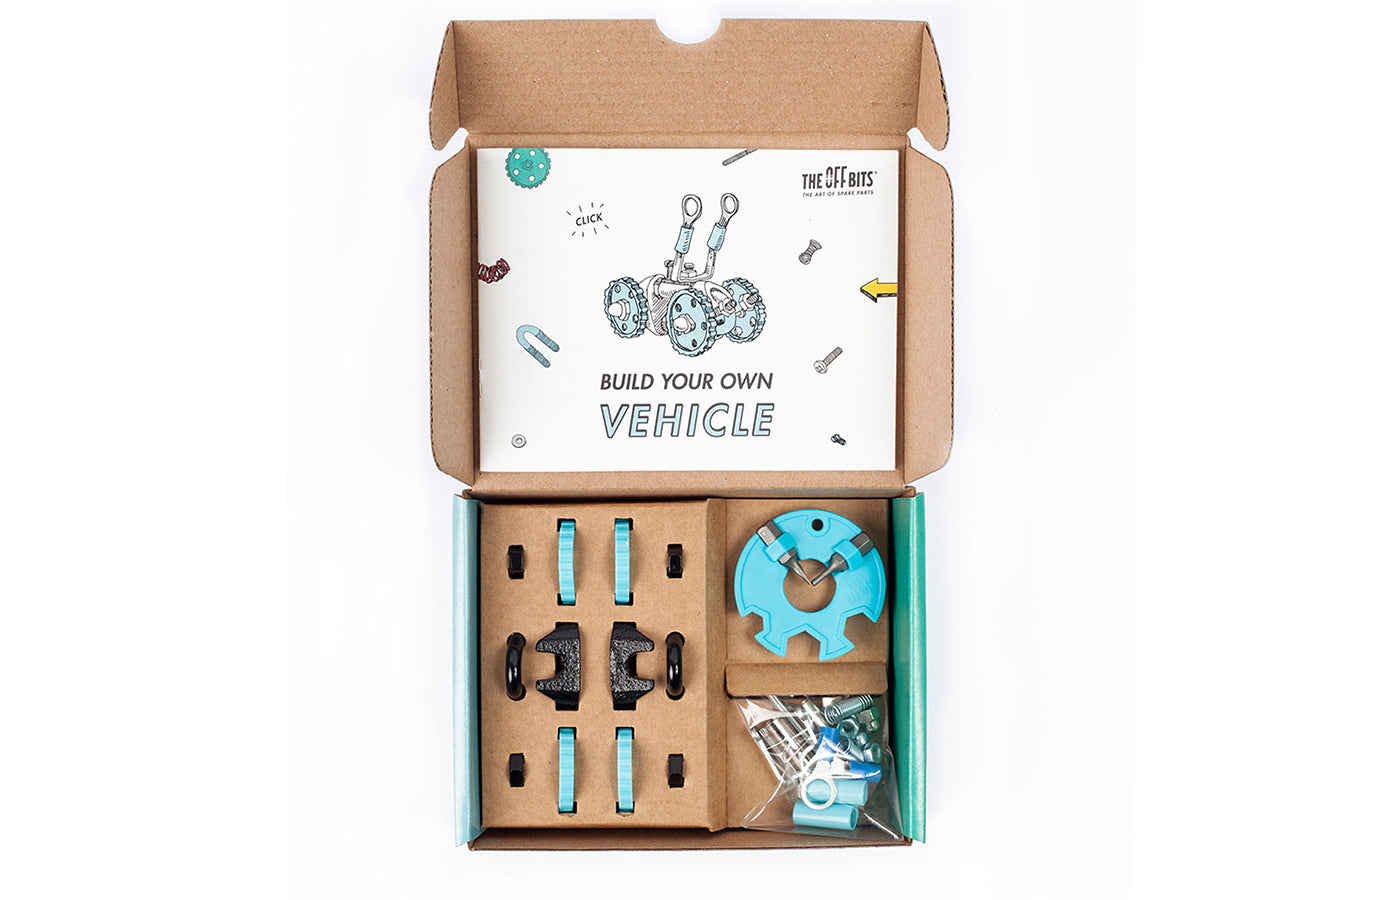 The OFFBITS - Vehicle Kit - GearBit